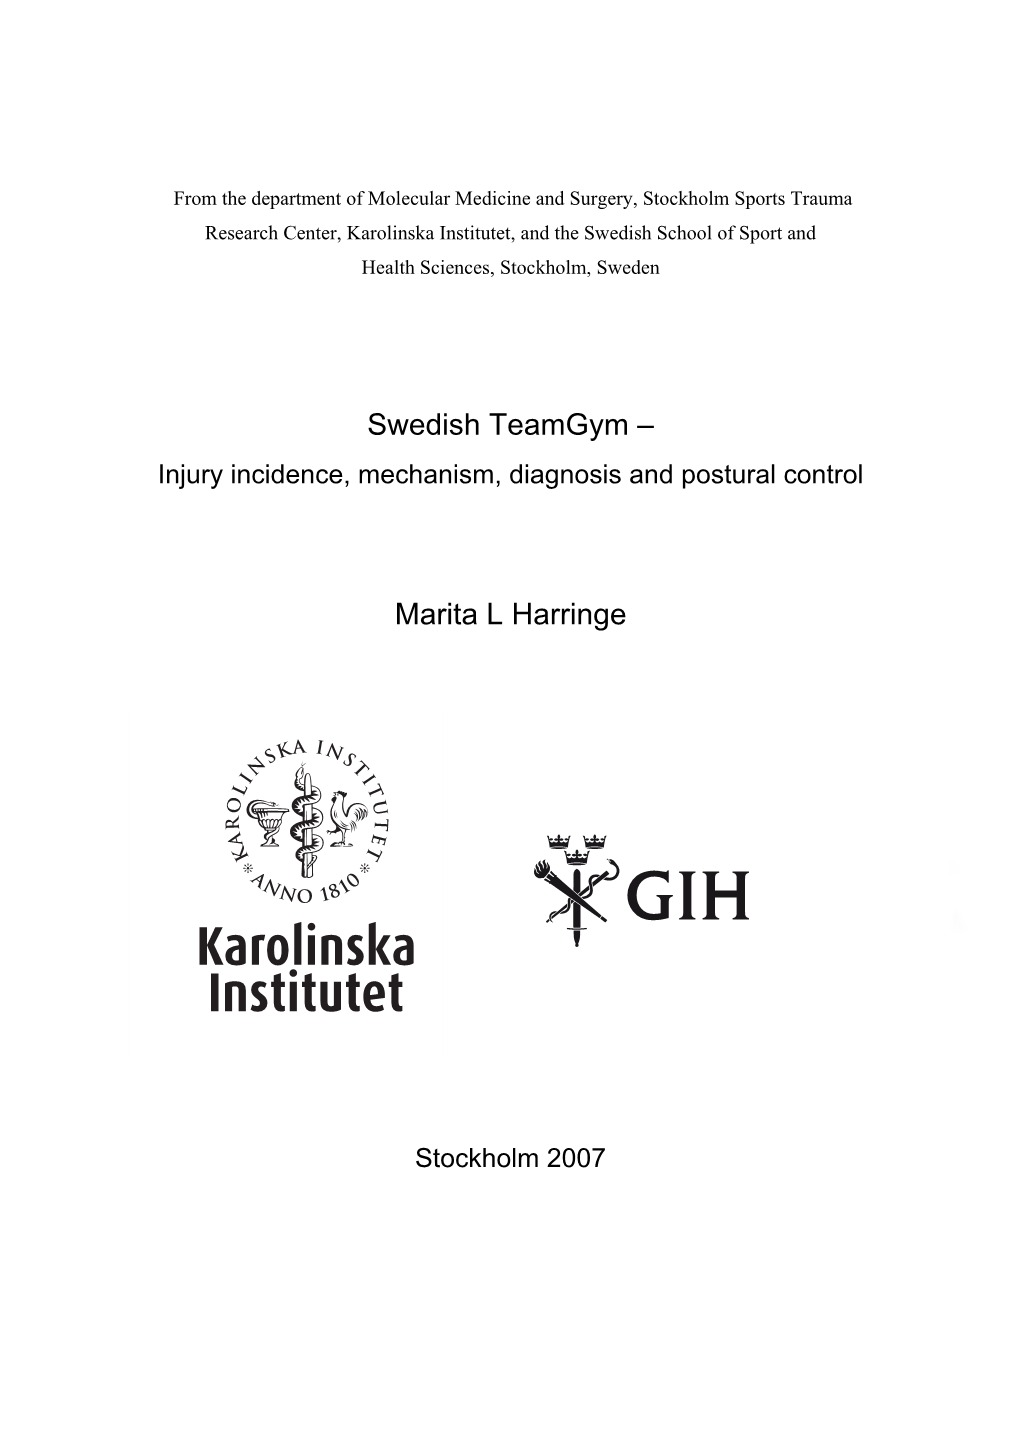 Swedish Teamgym – Injury Incidence, Mechanism, Diagnosis and Postural Control